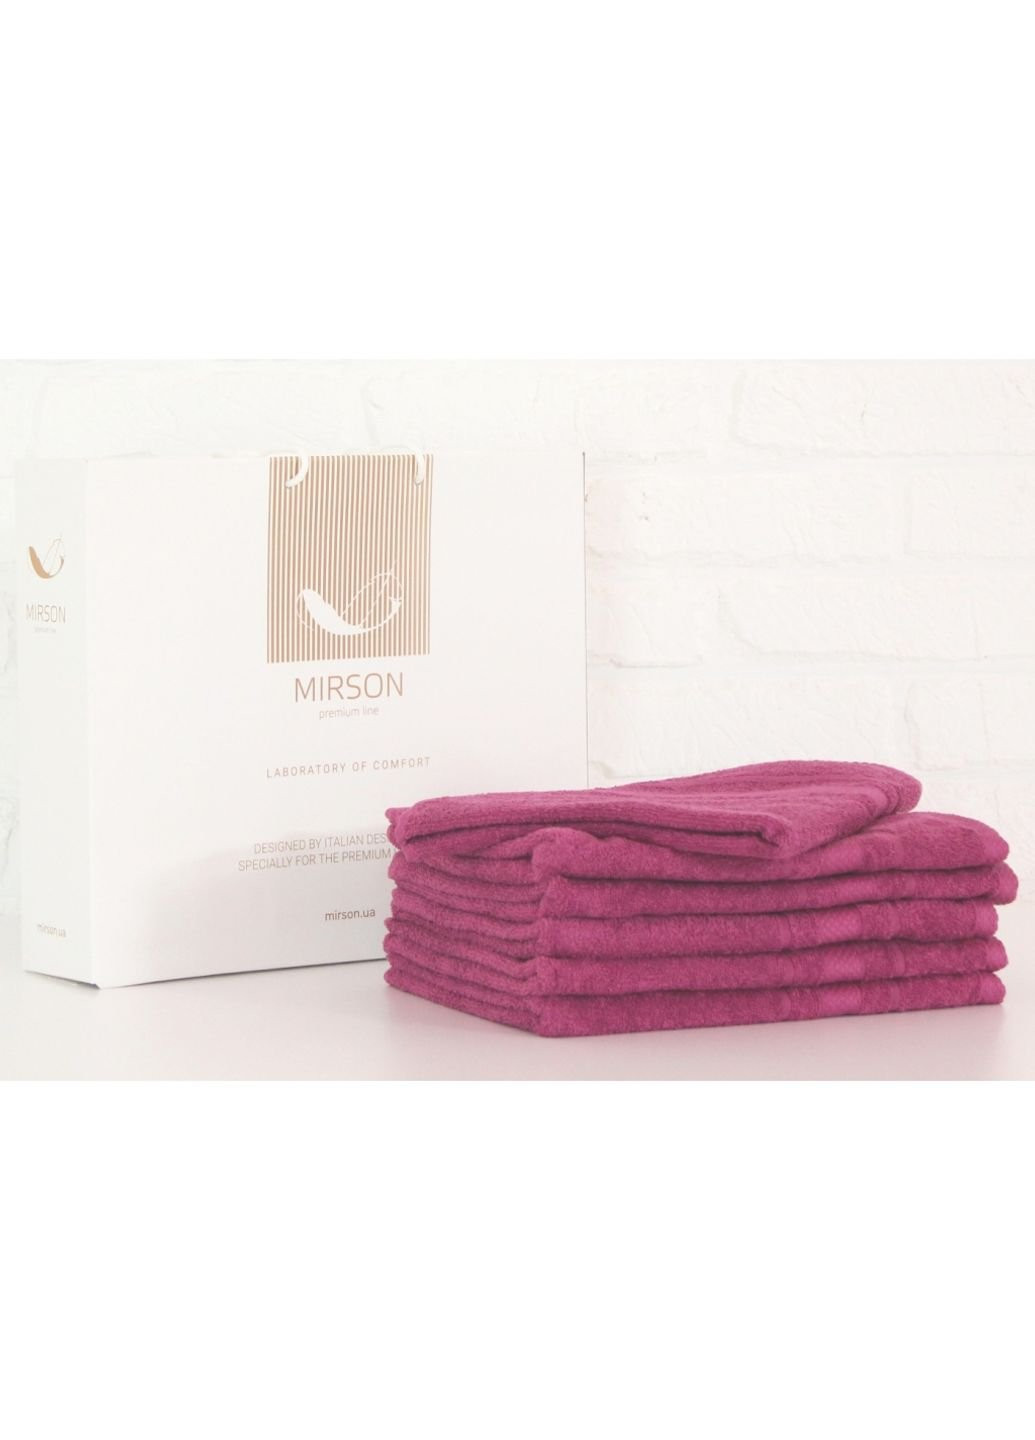 Mirson полотенце набор банных №5081 elite softness plum 70х140 6 шт (2200003524215) малиновый производство - Украина